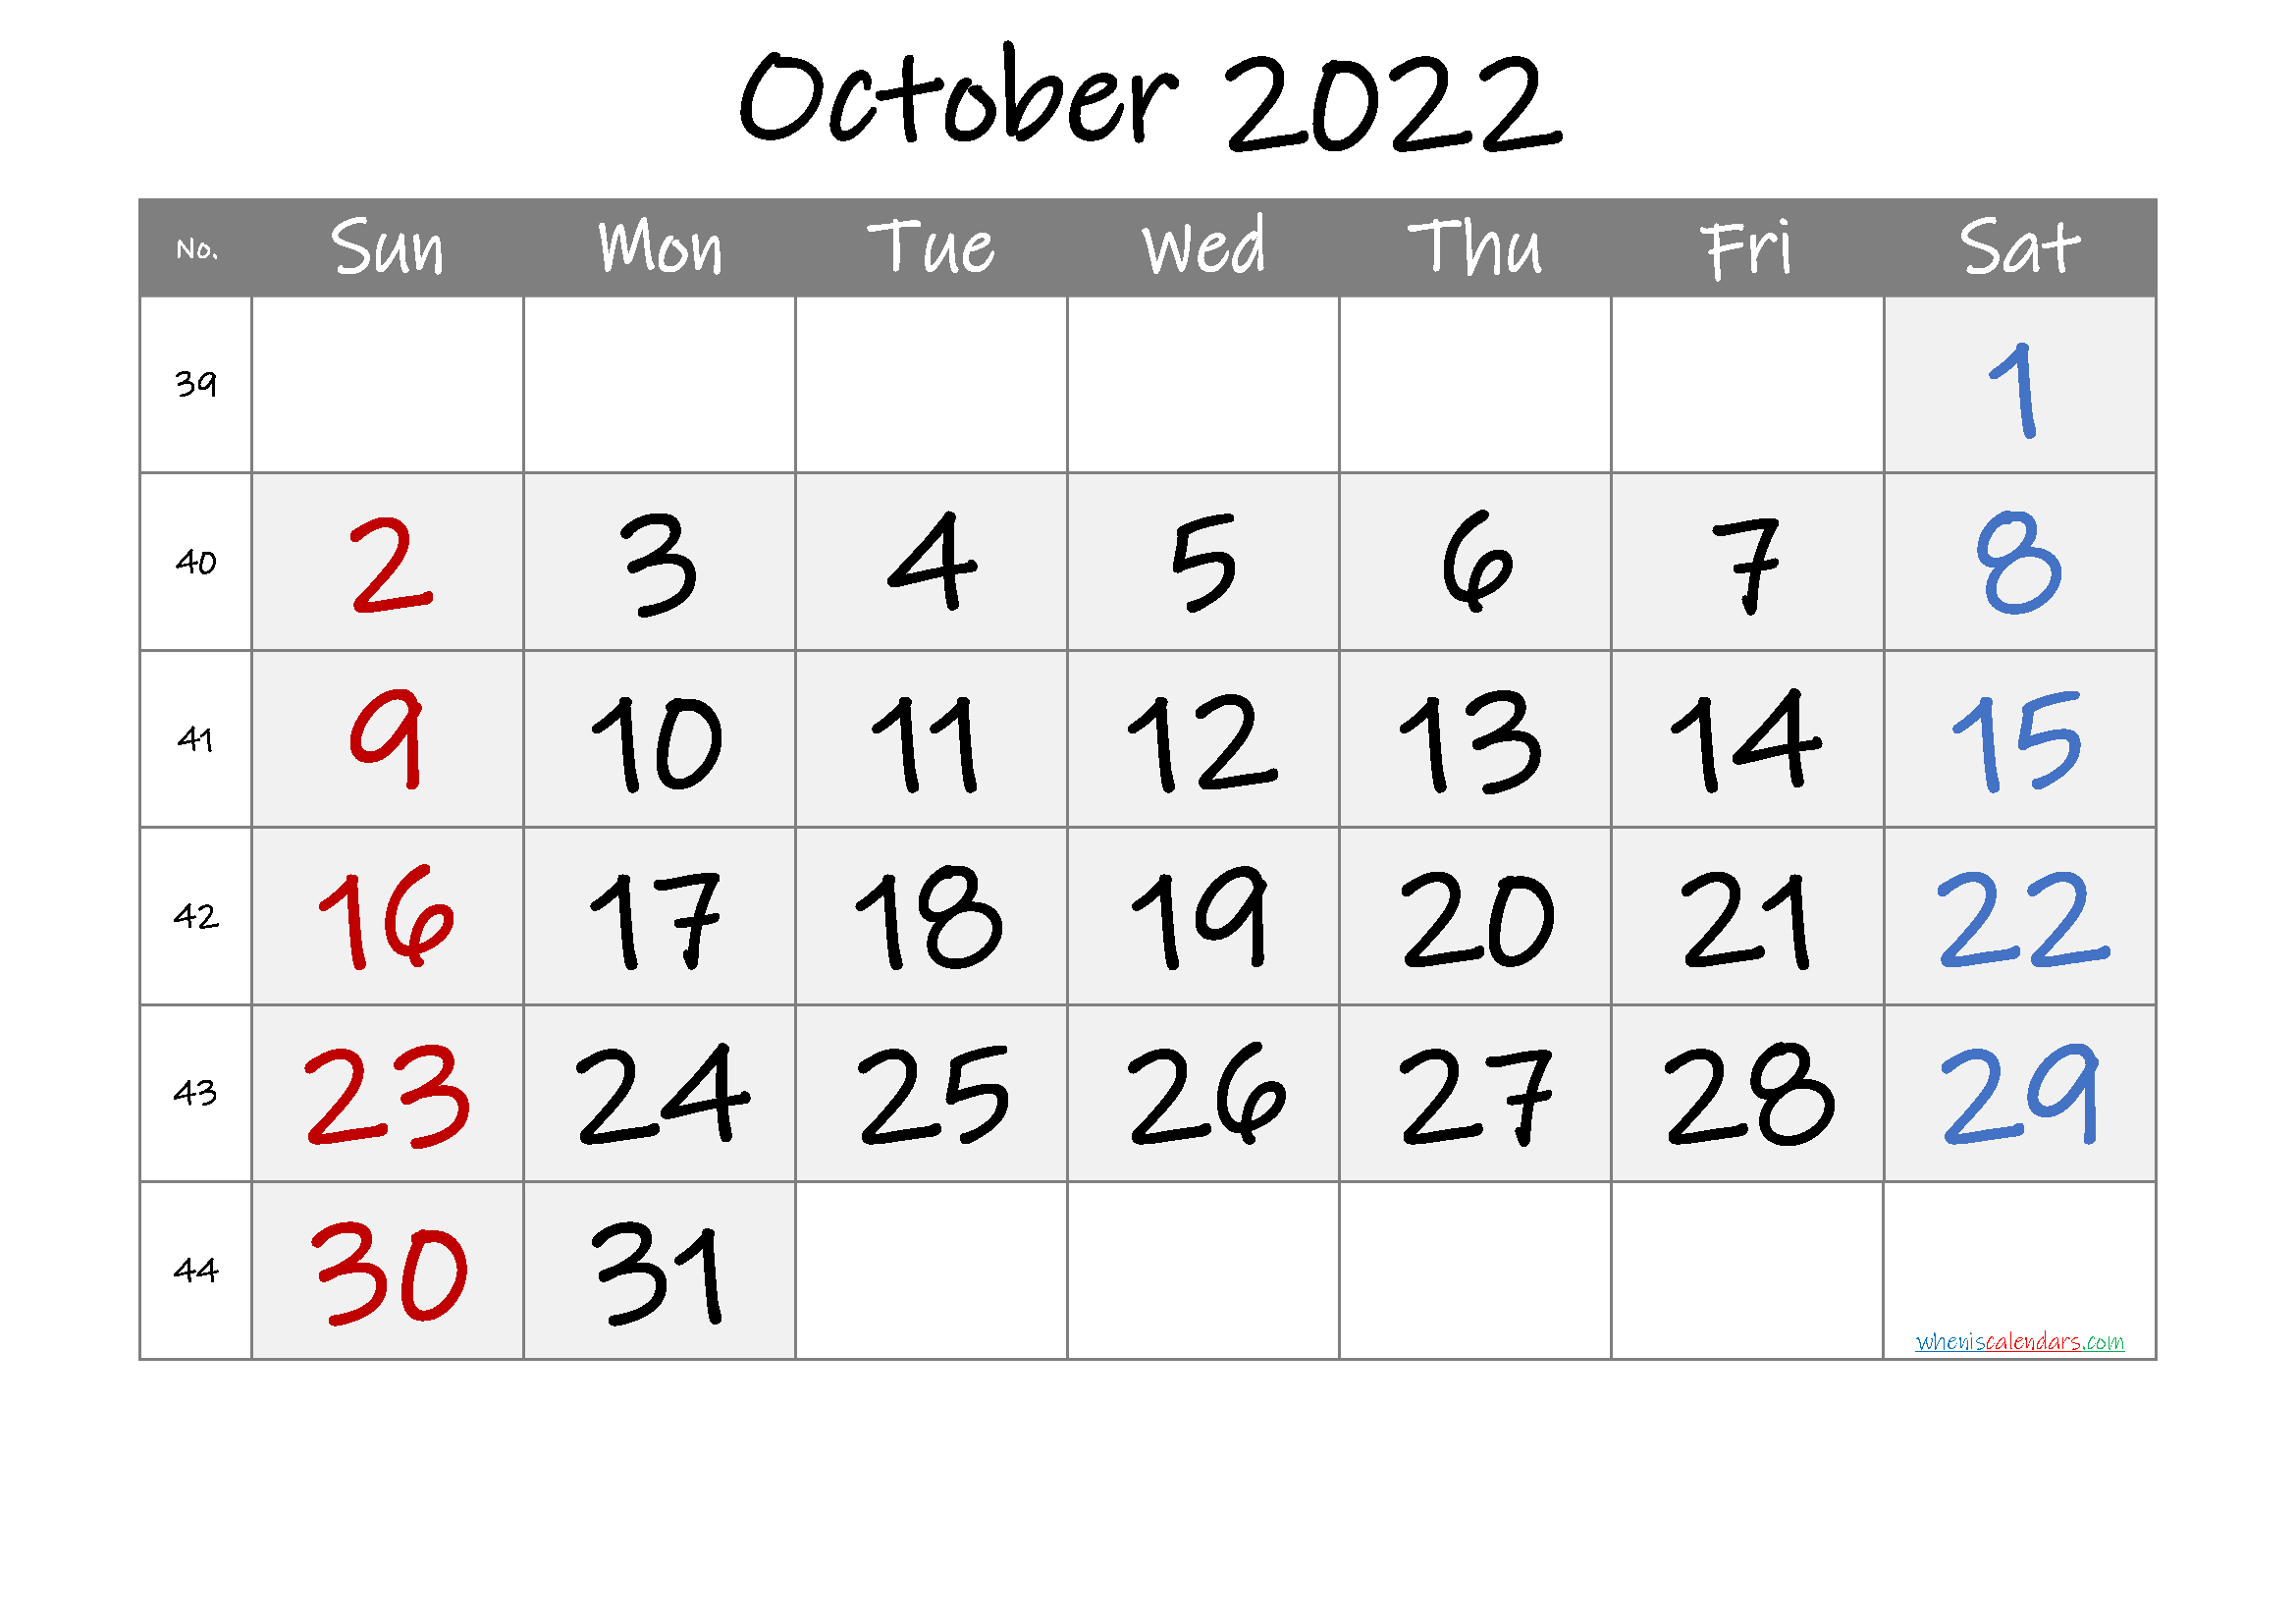 free-october-2022-calendar-6-templates